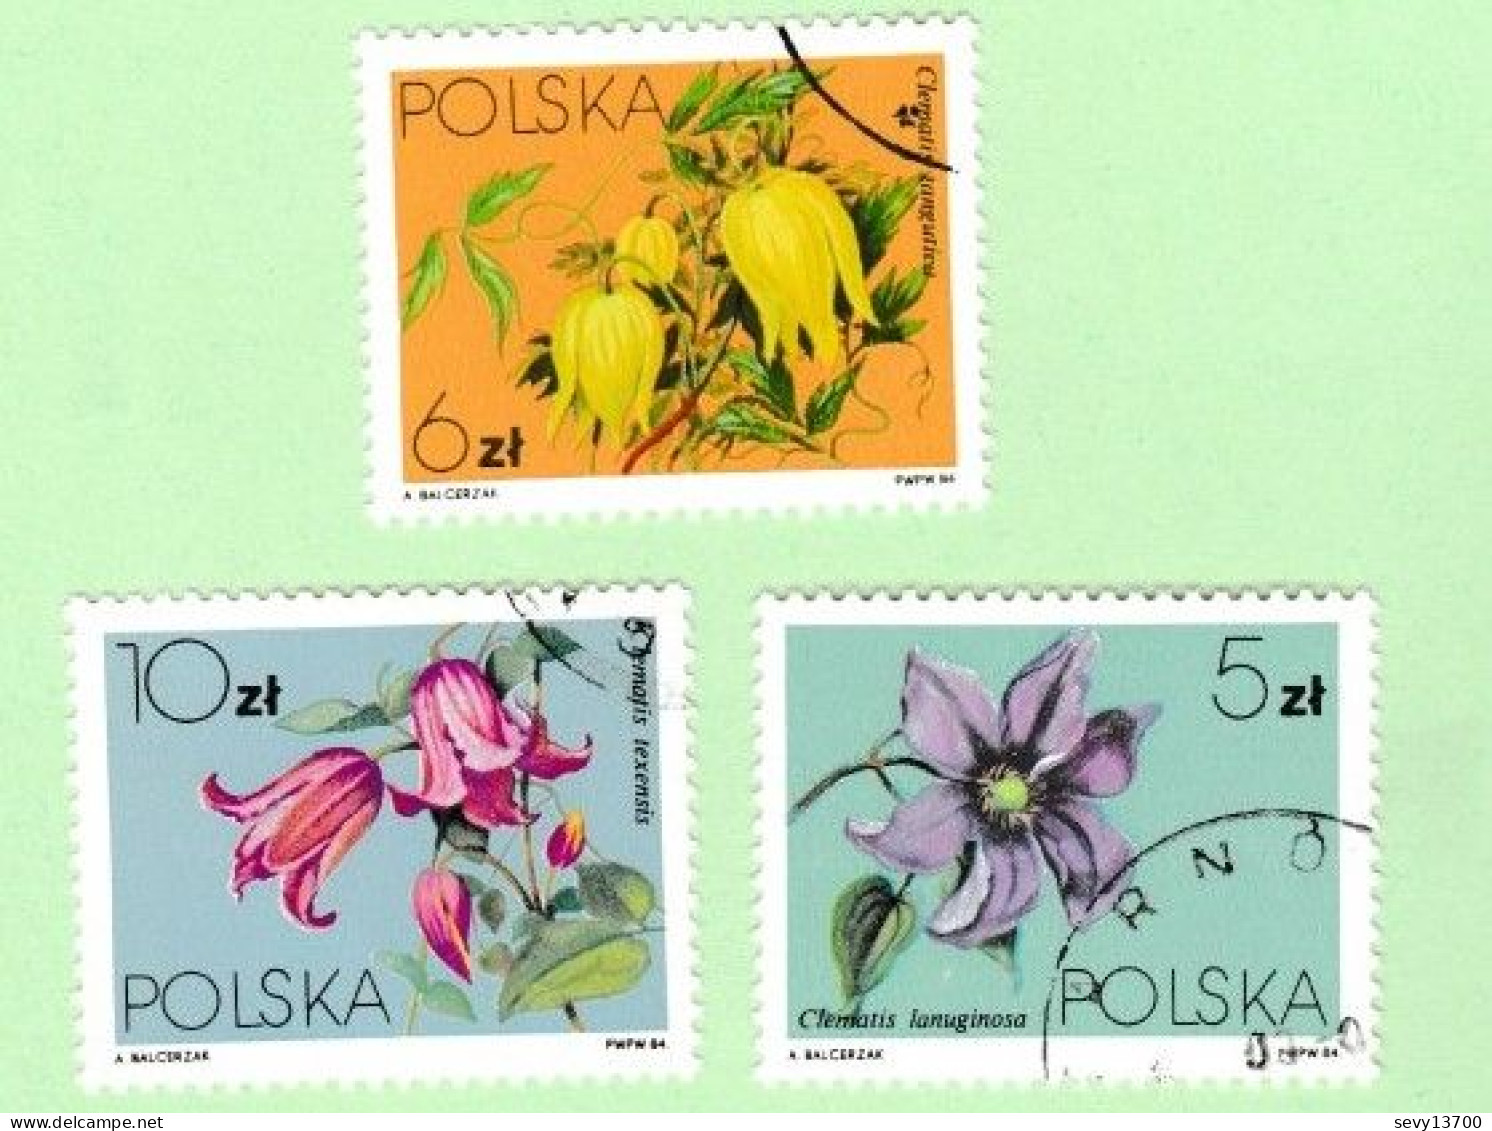 Pologne - Polska lot 48 timbres les fleurs